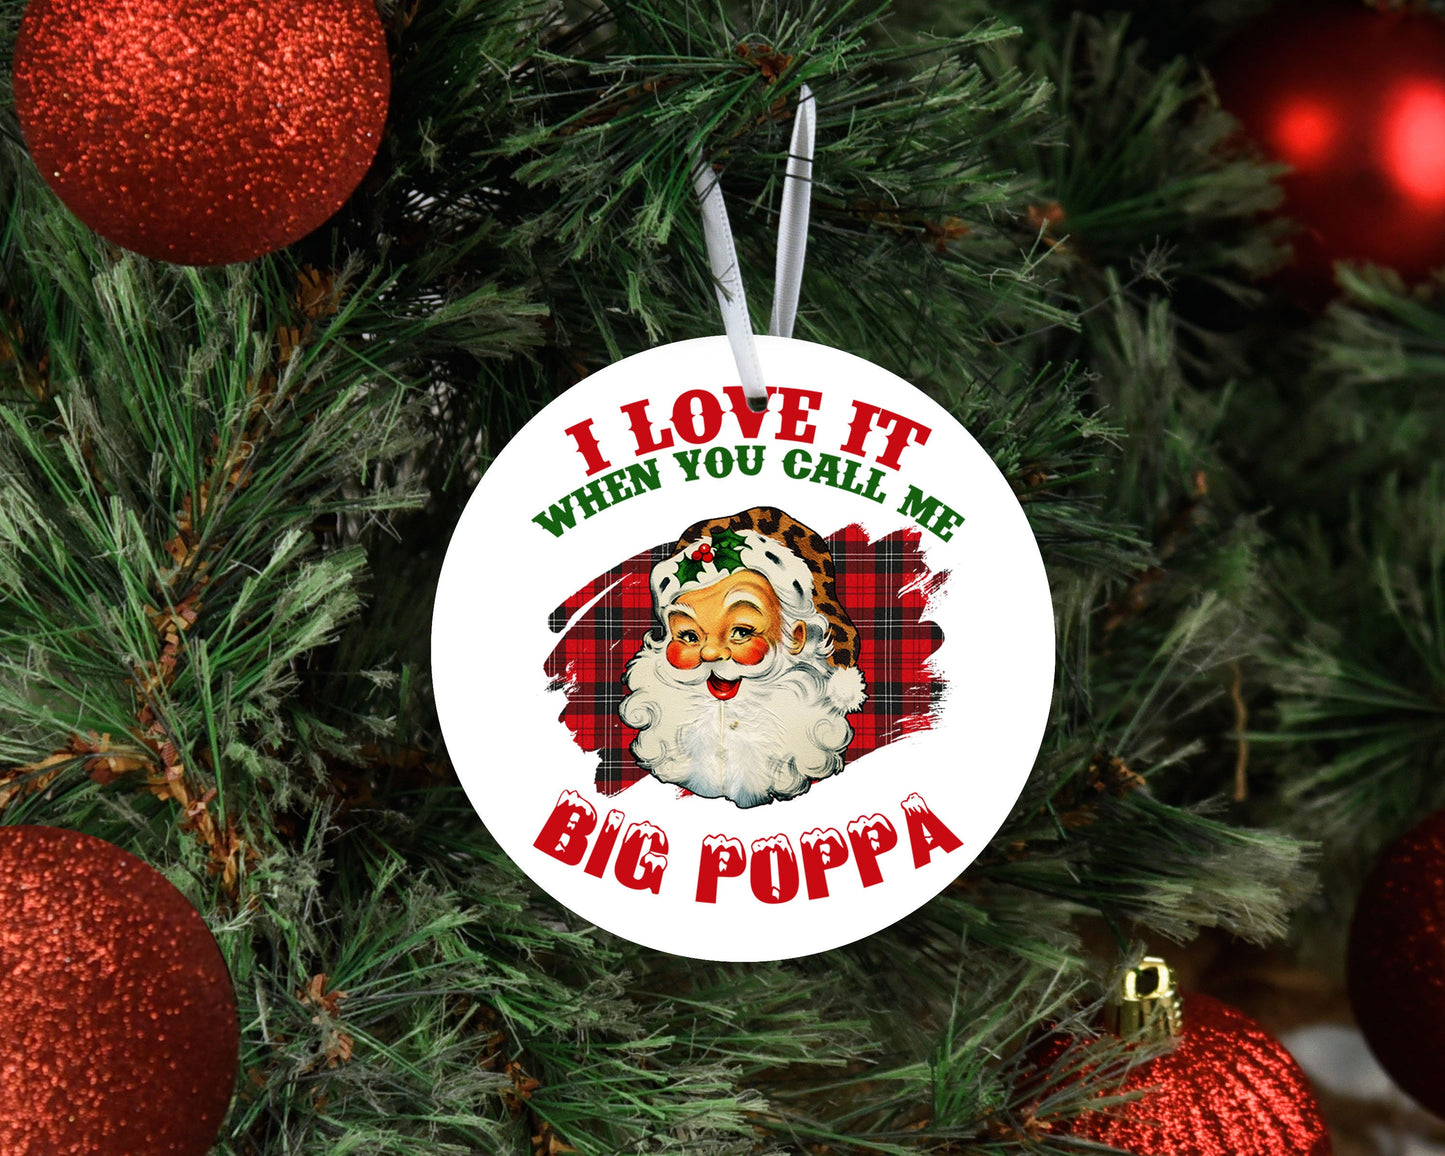 I Love it When You Call Me Big Poppa Santa Round Ceramic Christmas Ornament